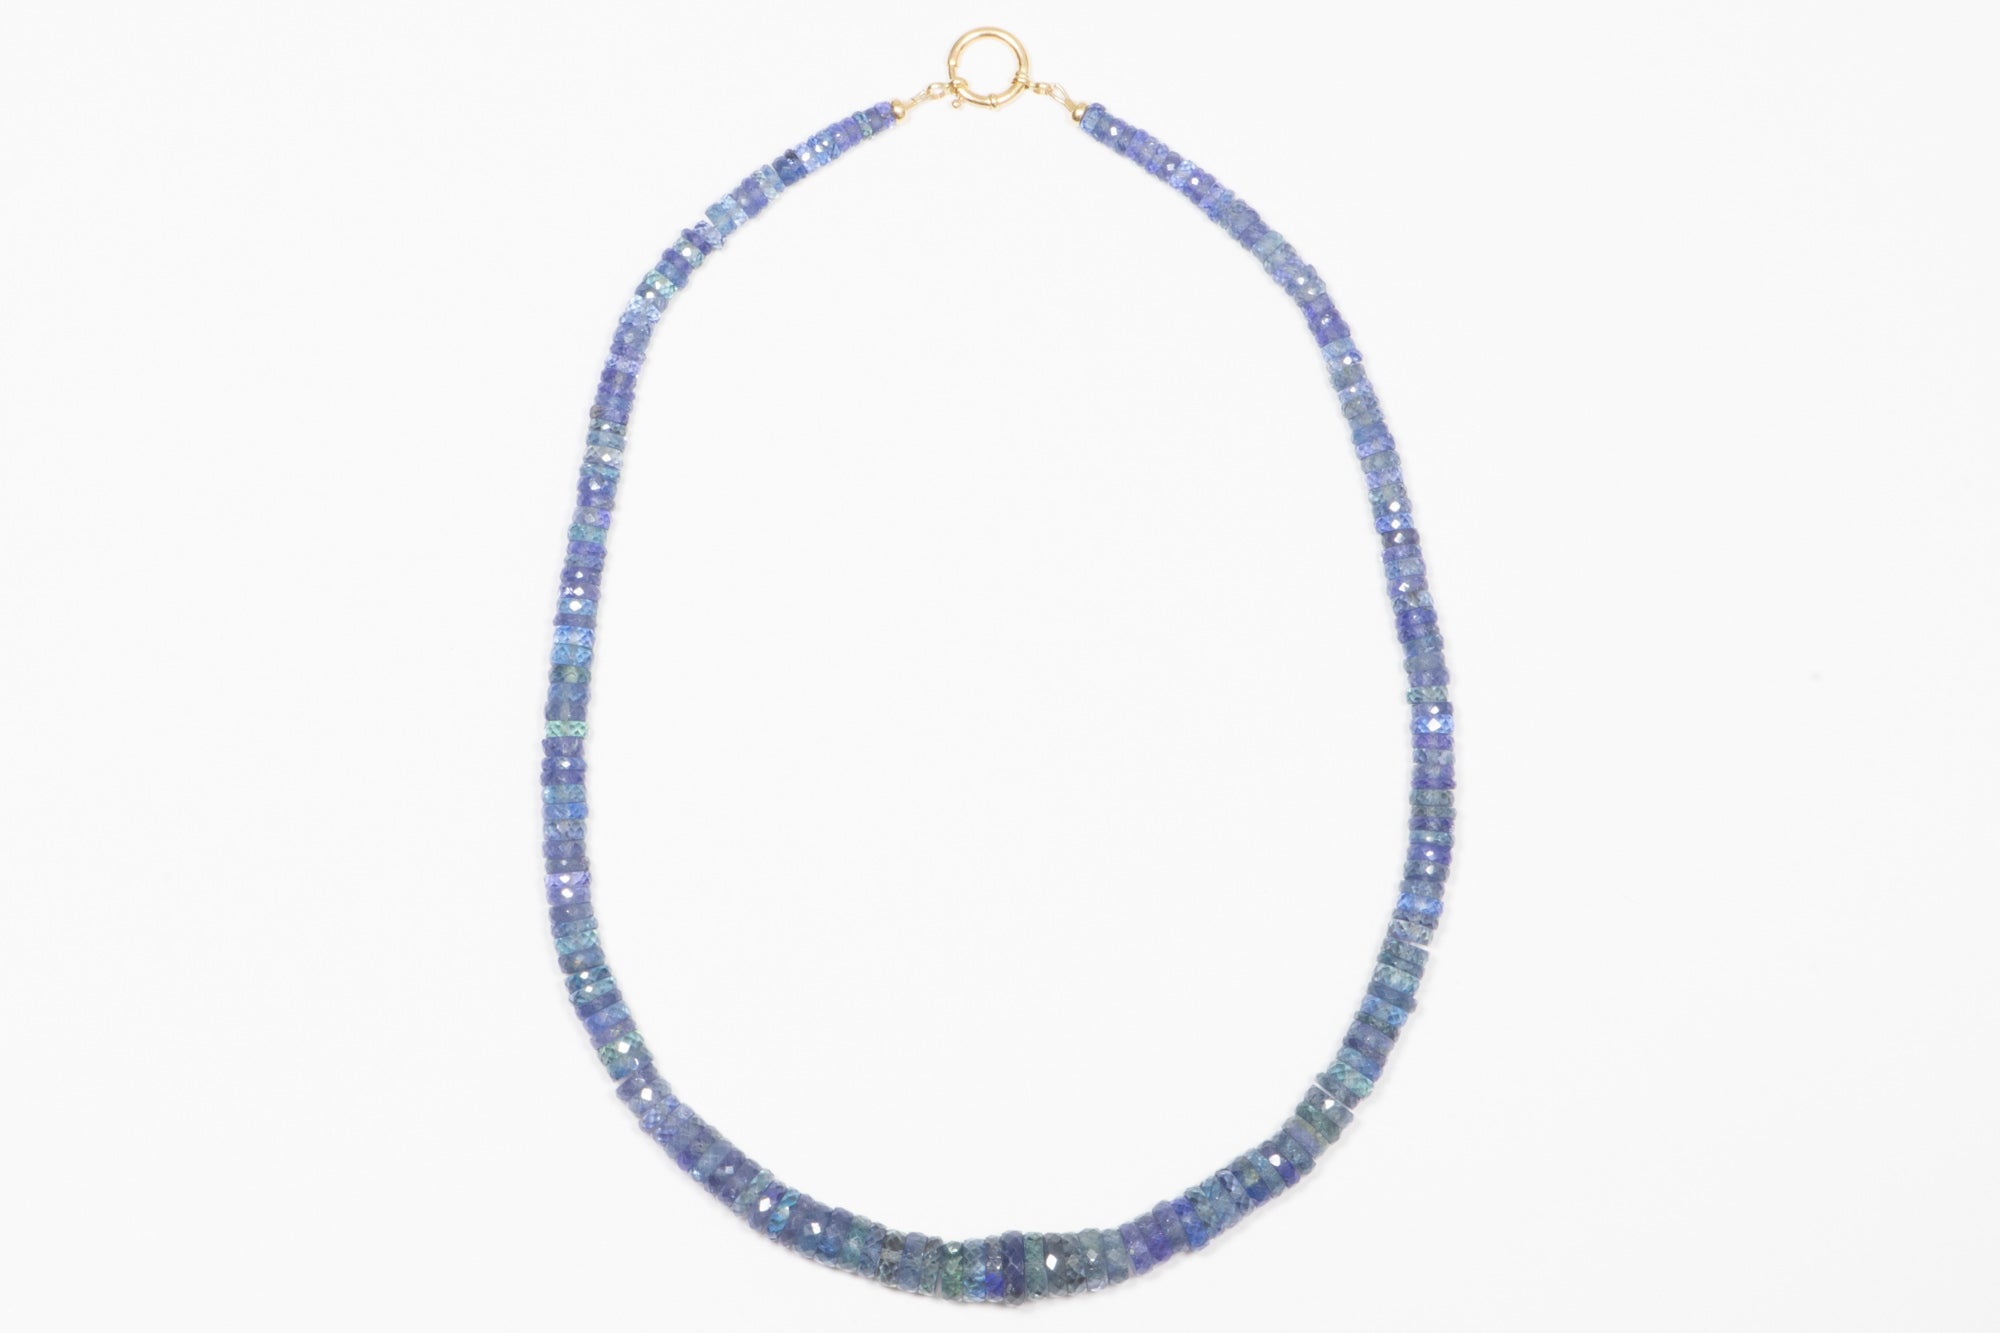 Tanzanite beads necklace with diamond side pendant